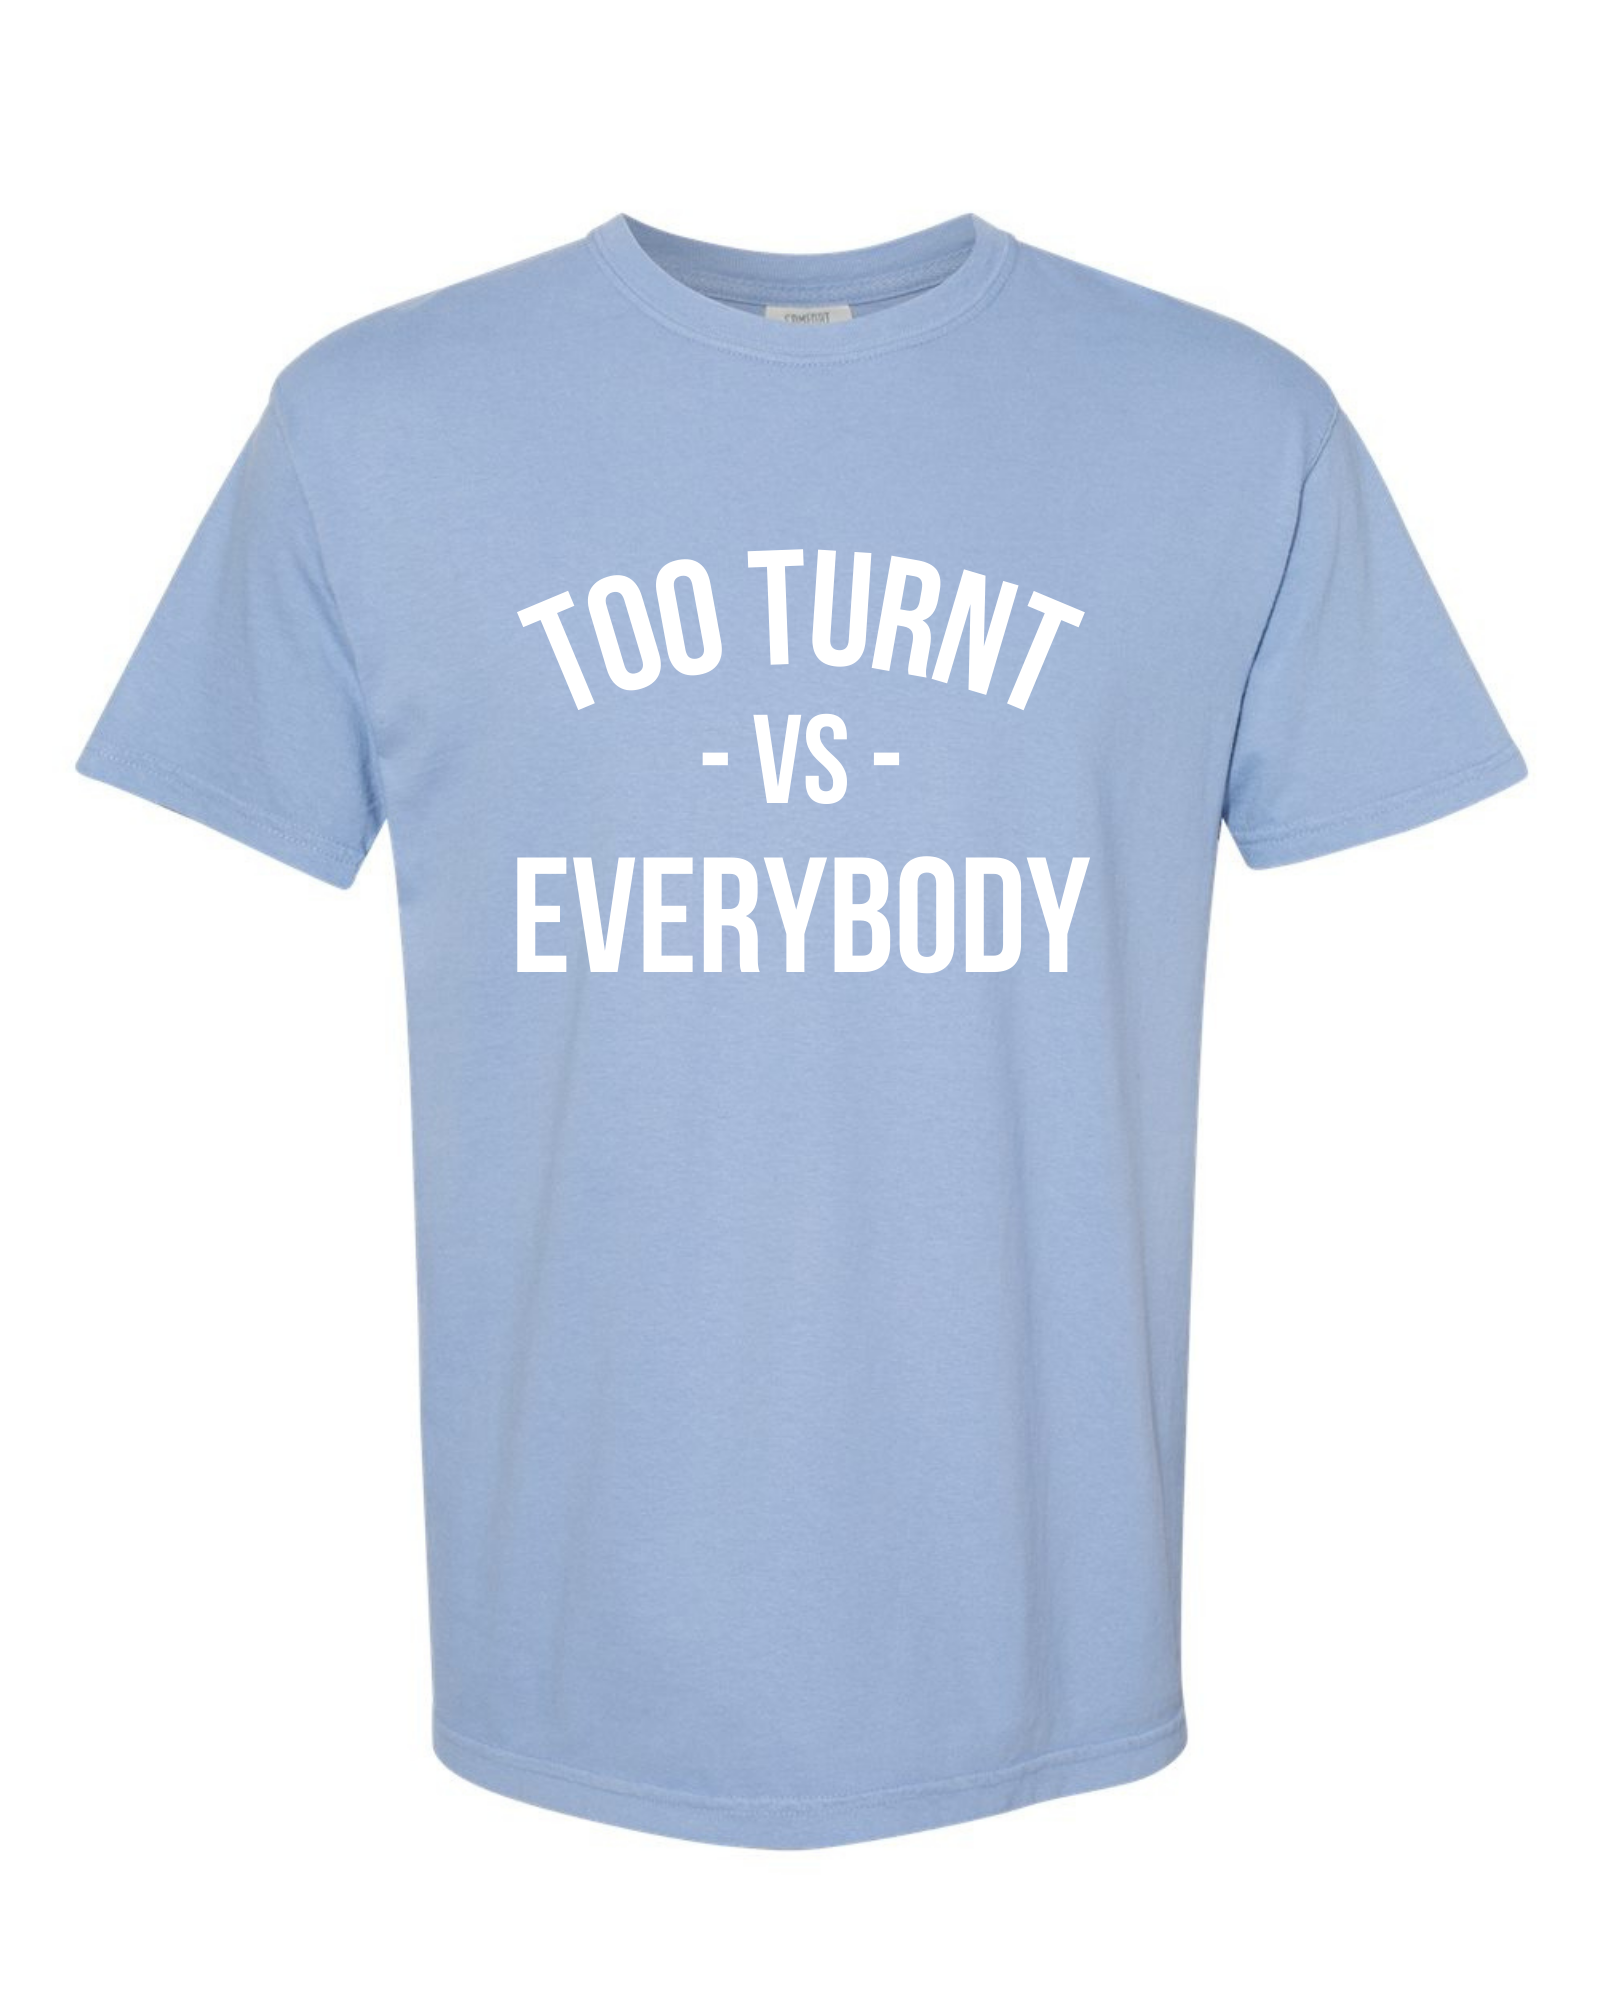 Turnt vs. Everybody Shirt